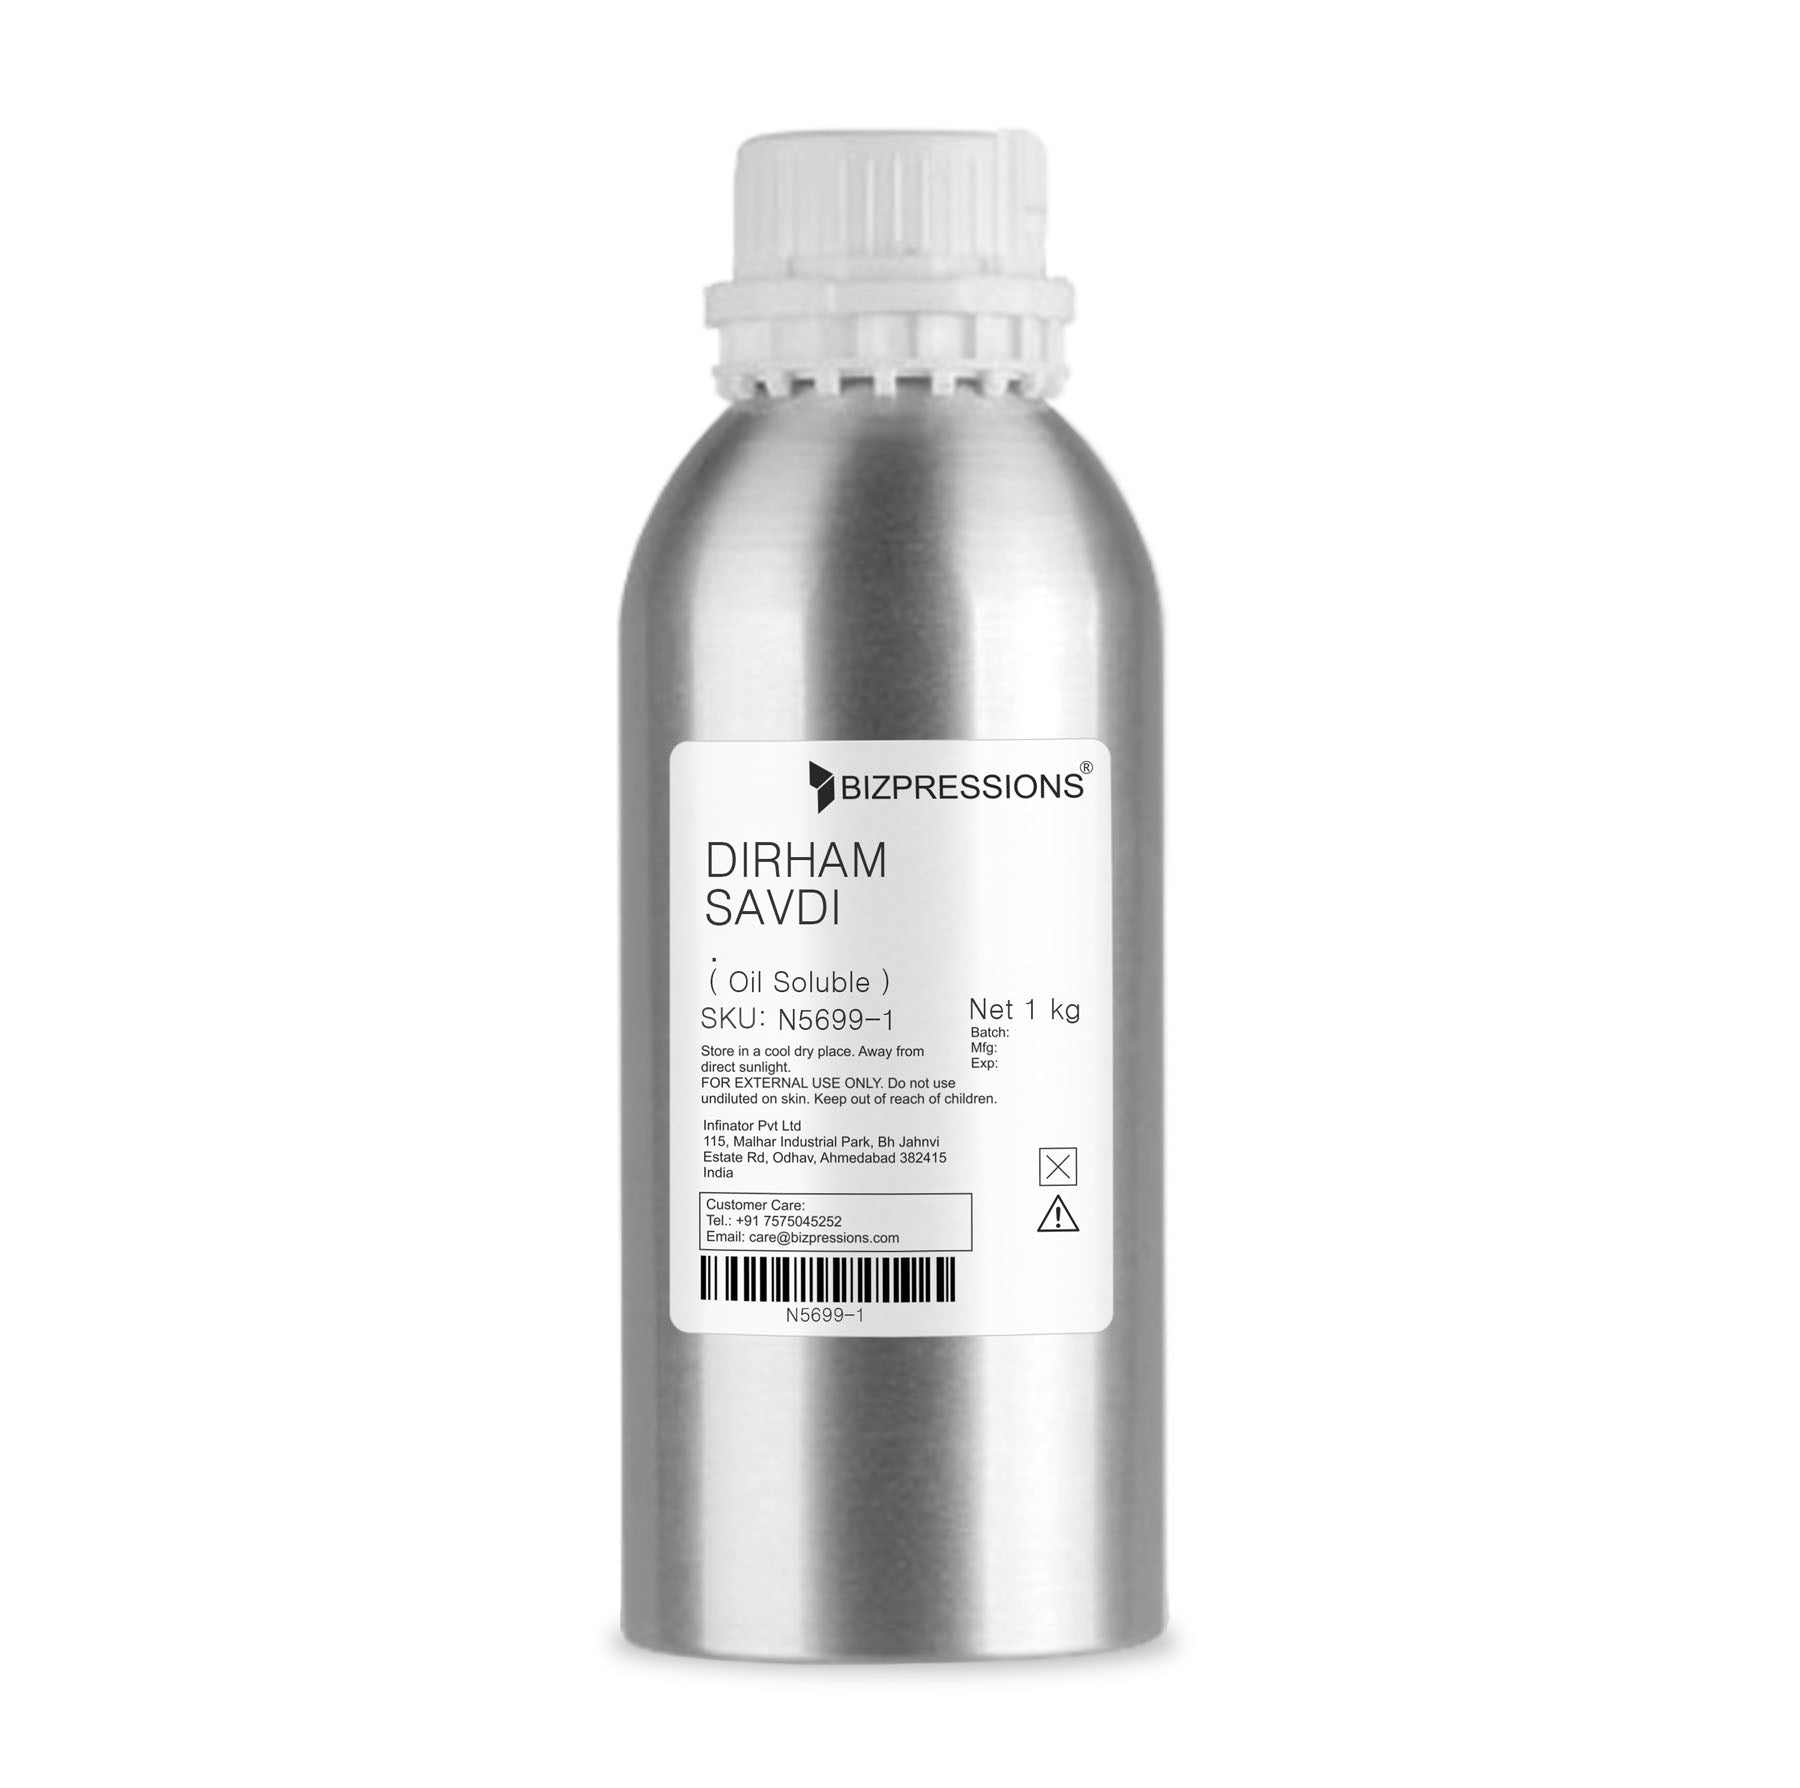 DIRHAM SAVDI - Fragrance ( Oil Soluble ) - 1 kg